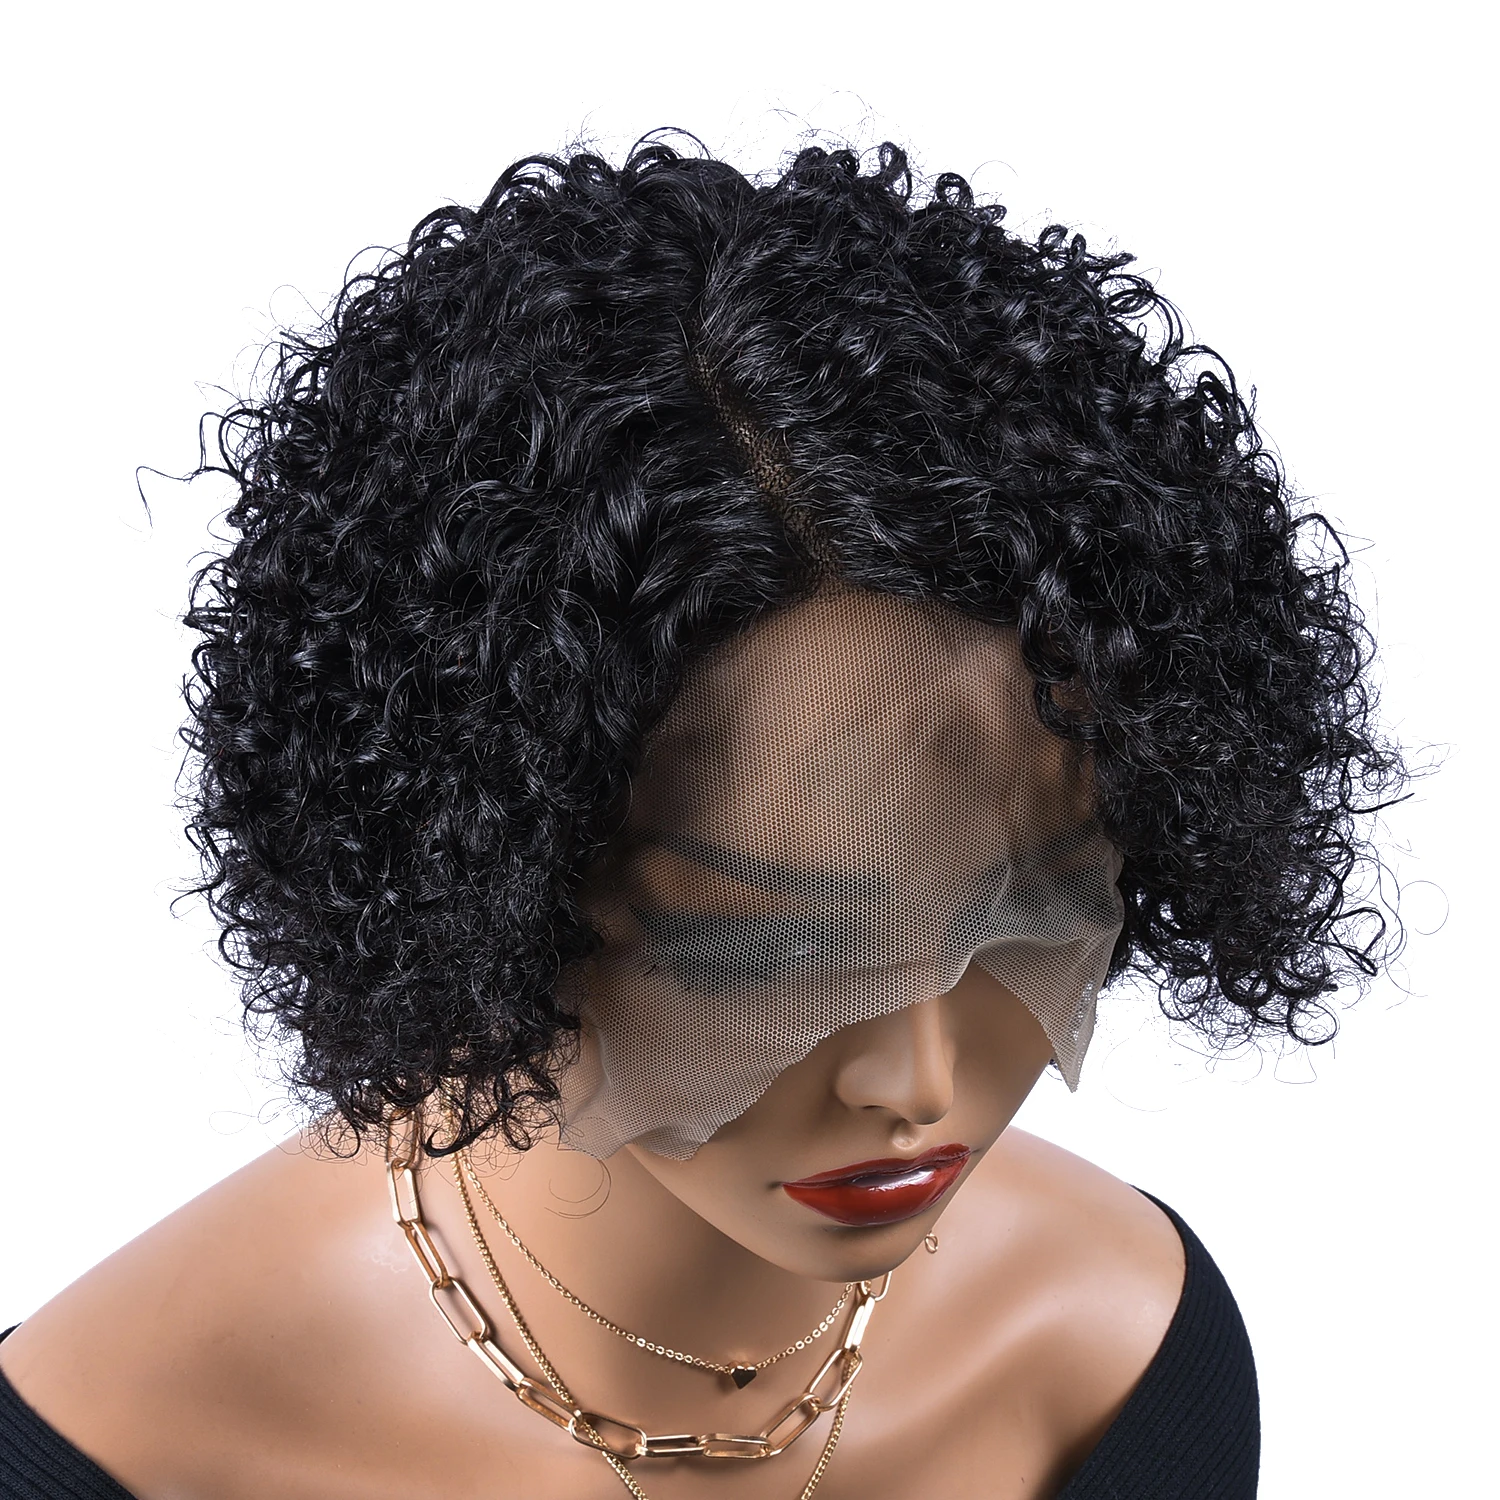 T Lace Curly Pixie Cut Human Hair Wigs T1B/99J Curly Pixie Cut Wigs OMBRE SIDE PARD Deel Lace Haarpruiken voor vrouw 8 inch 180%